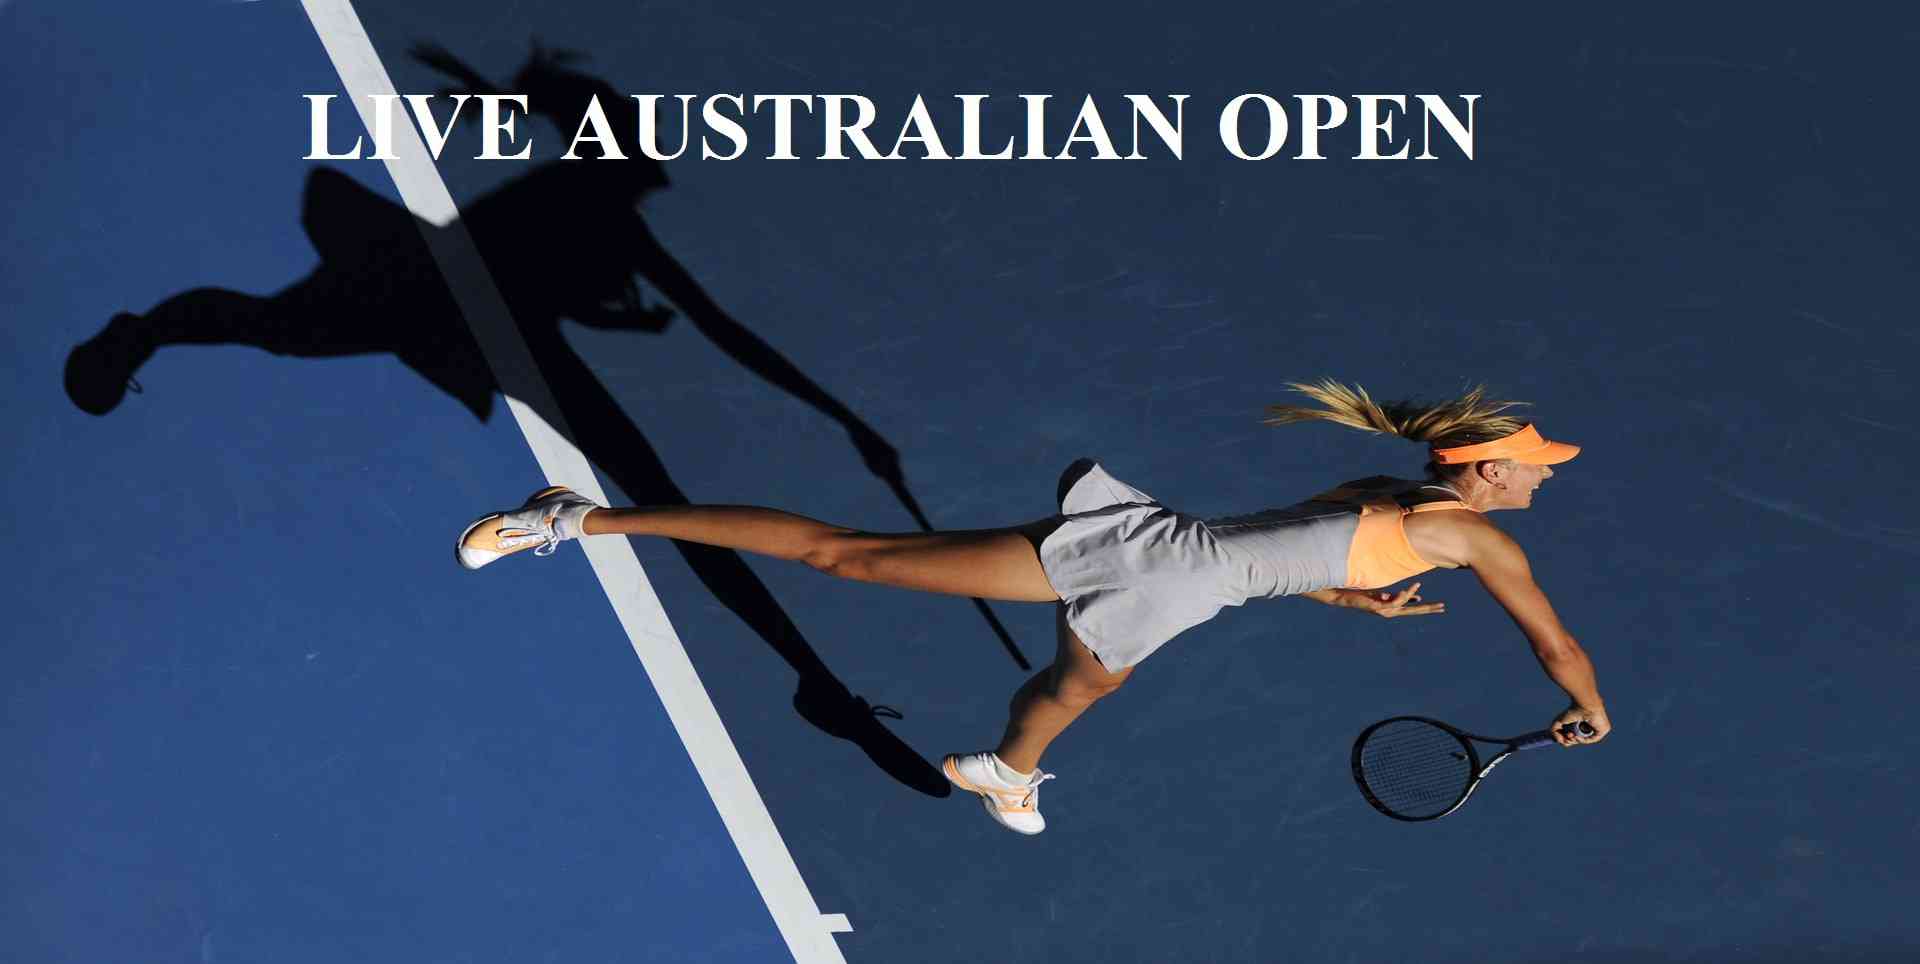 Australian Open live